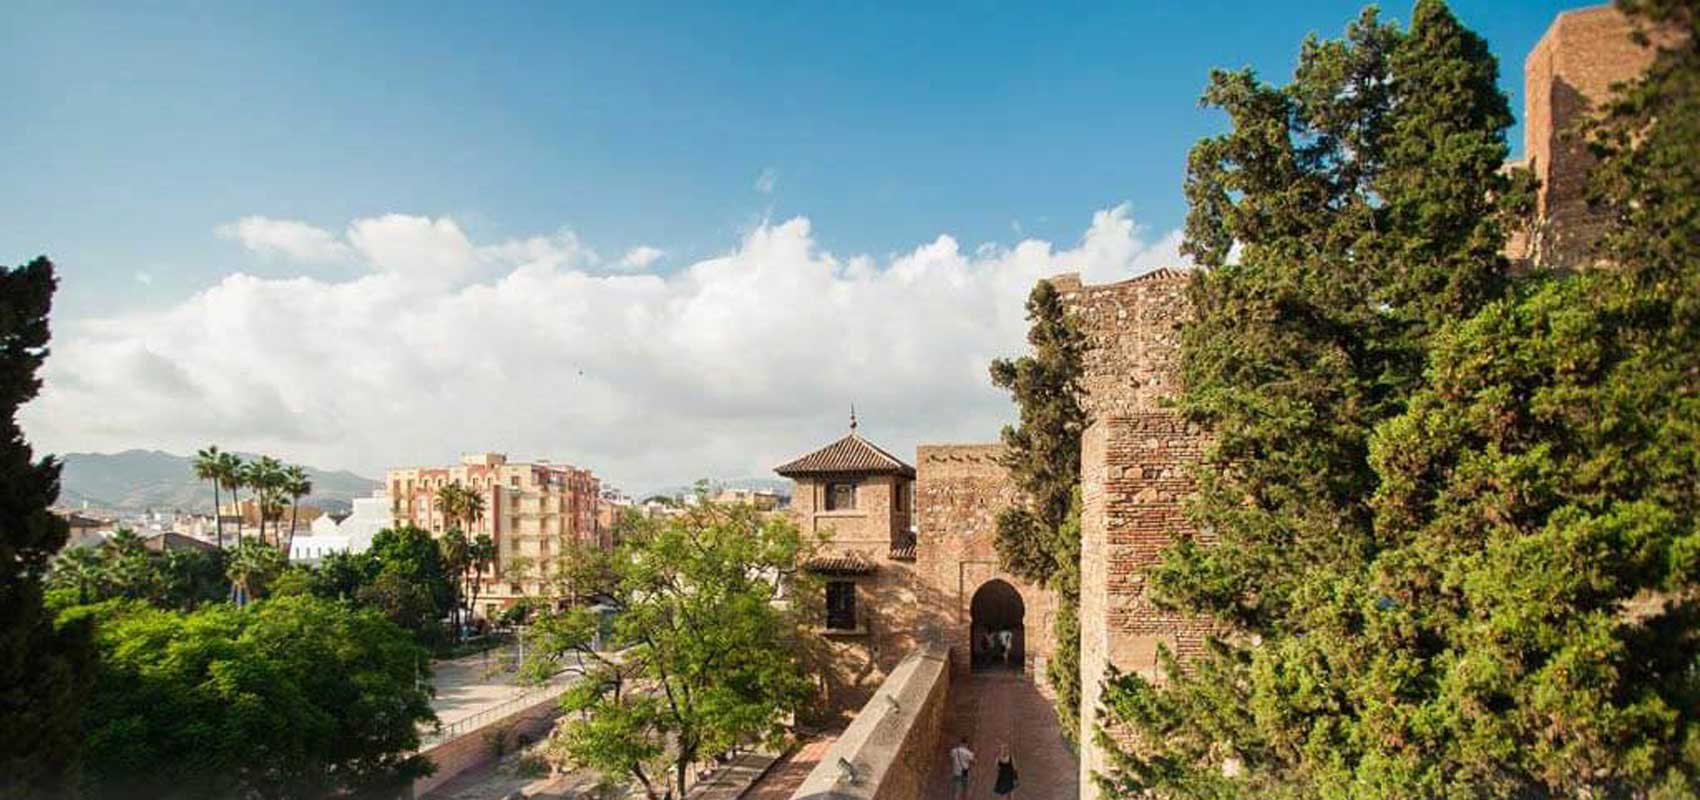 La Alcazaba de Malaga